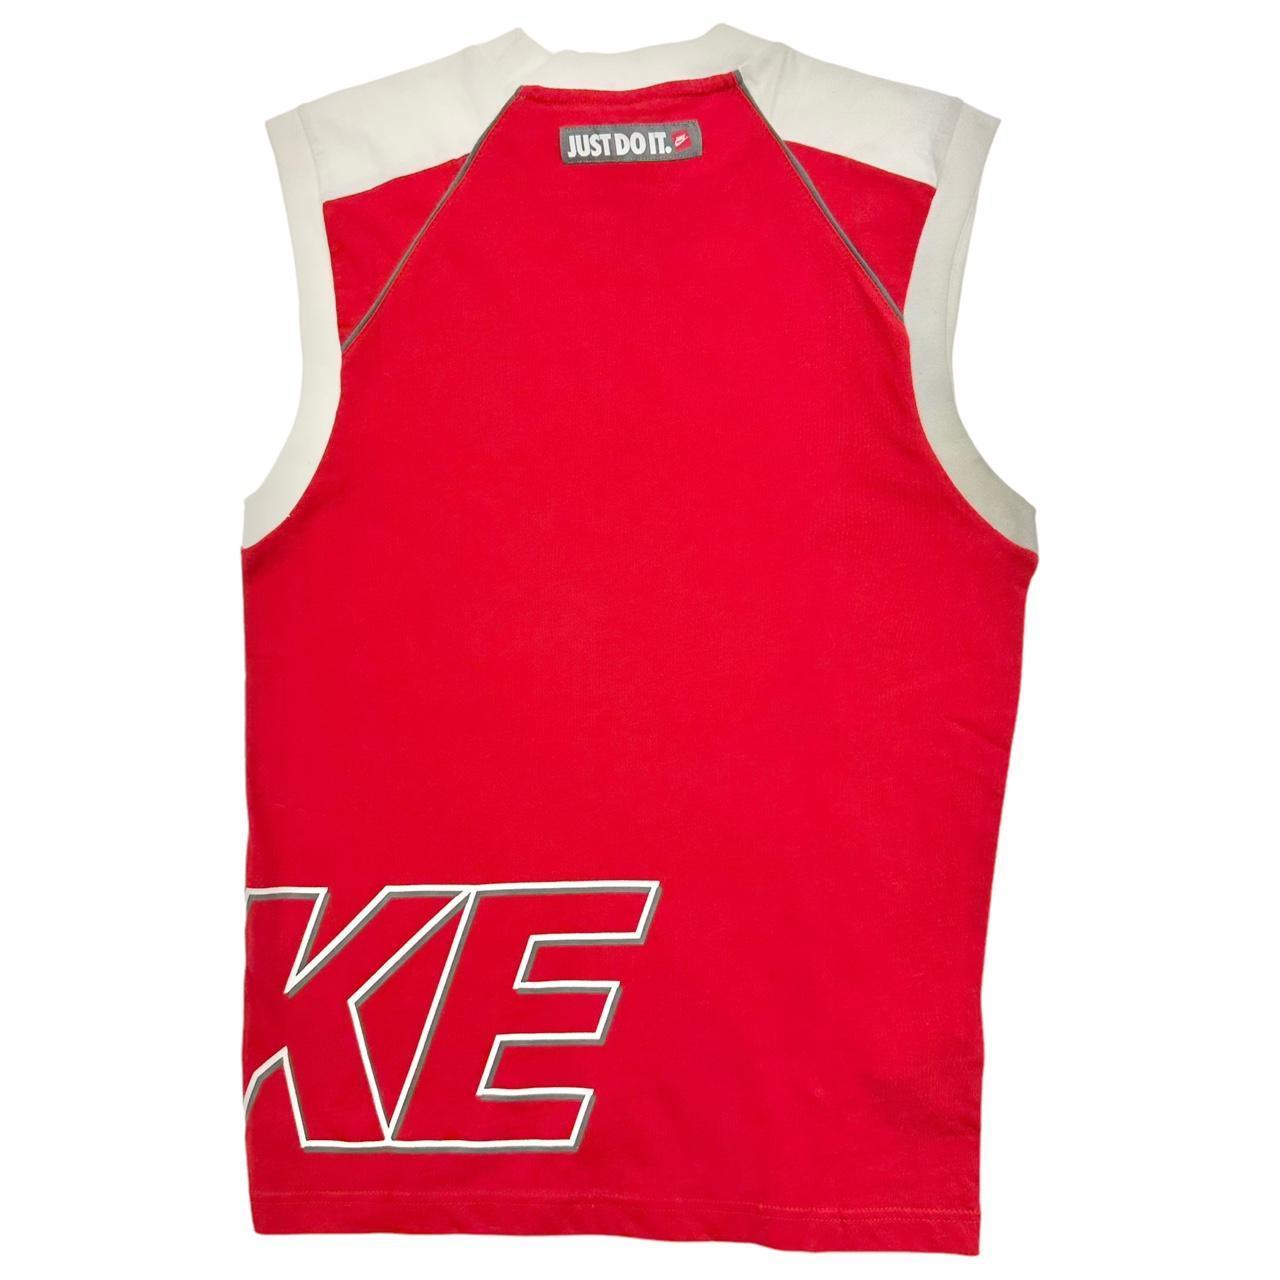 Vintage Nike vest size S - Known Source